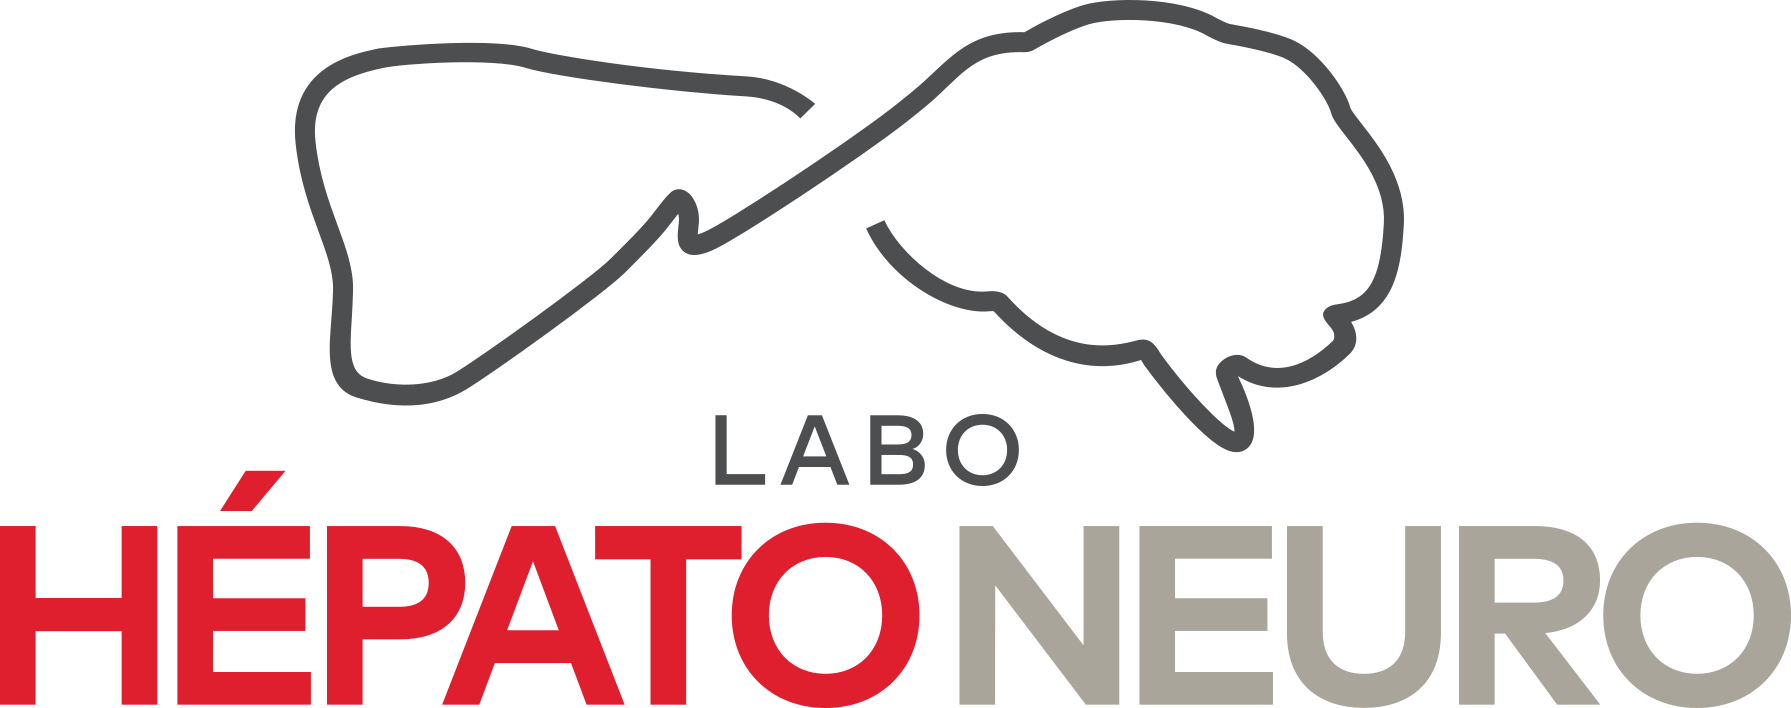 logo for the labo hepatoneuro